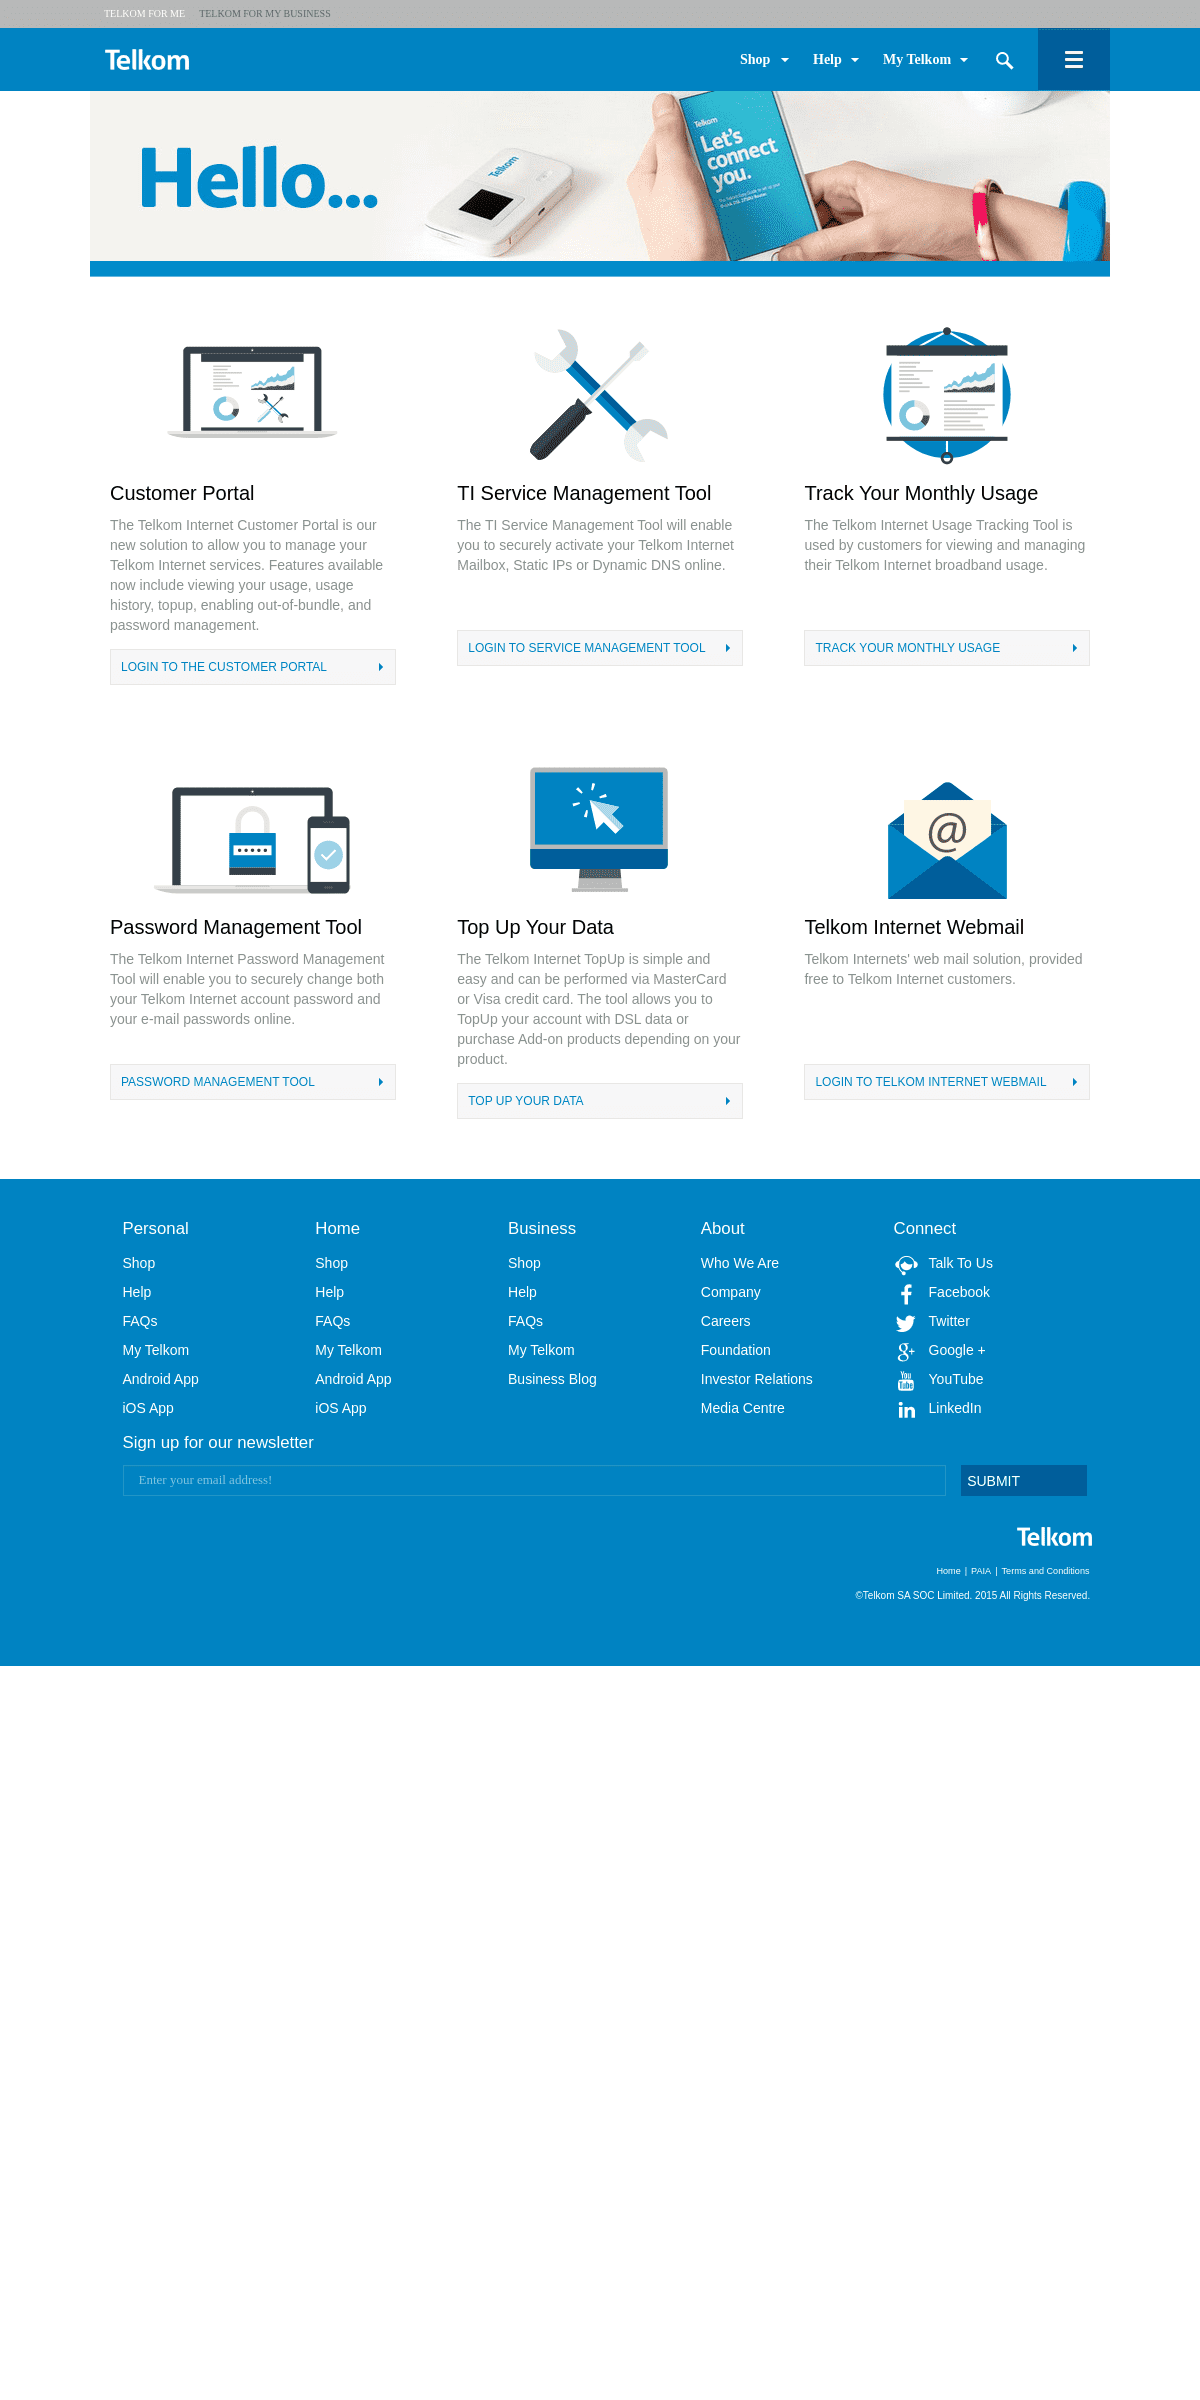 A complete backup of telkomsa.net